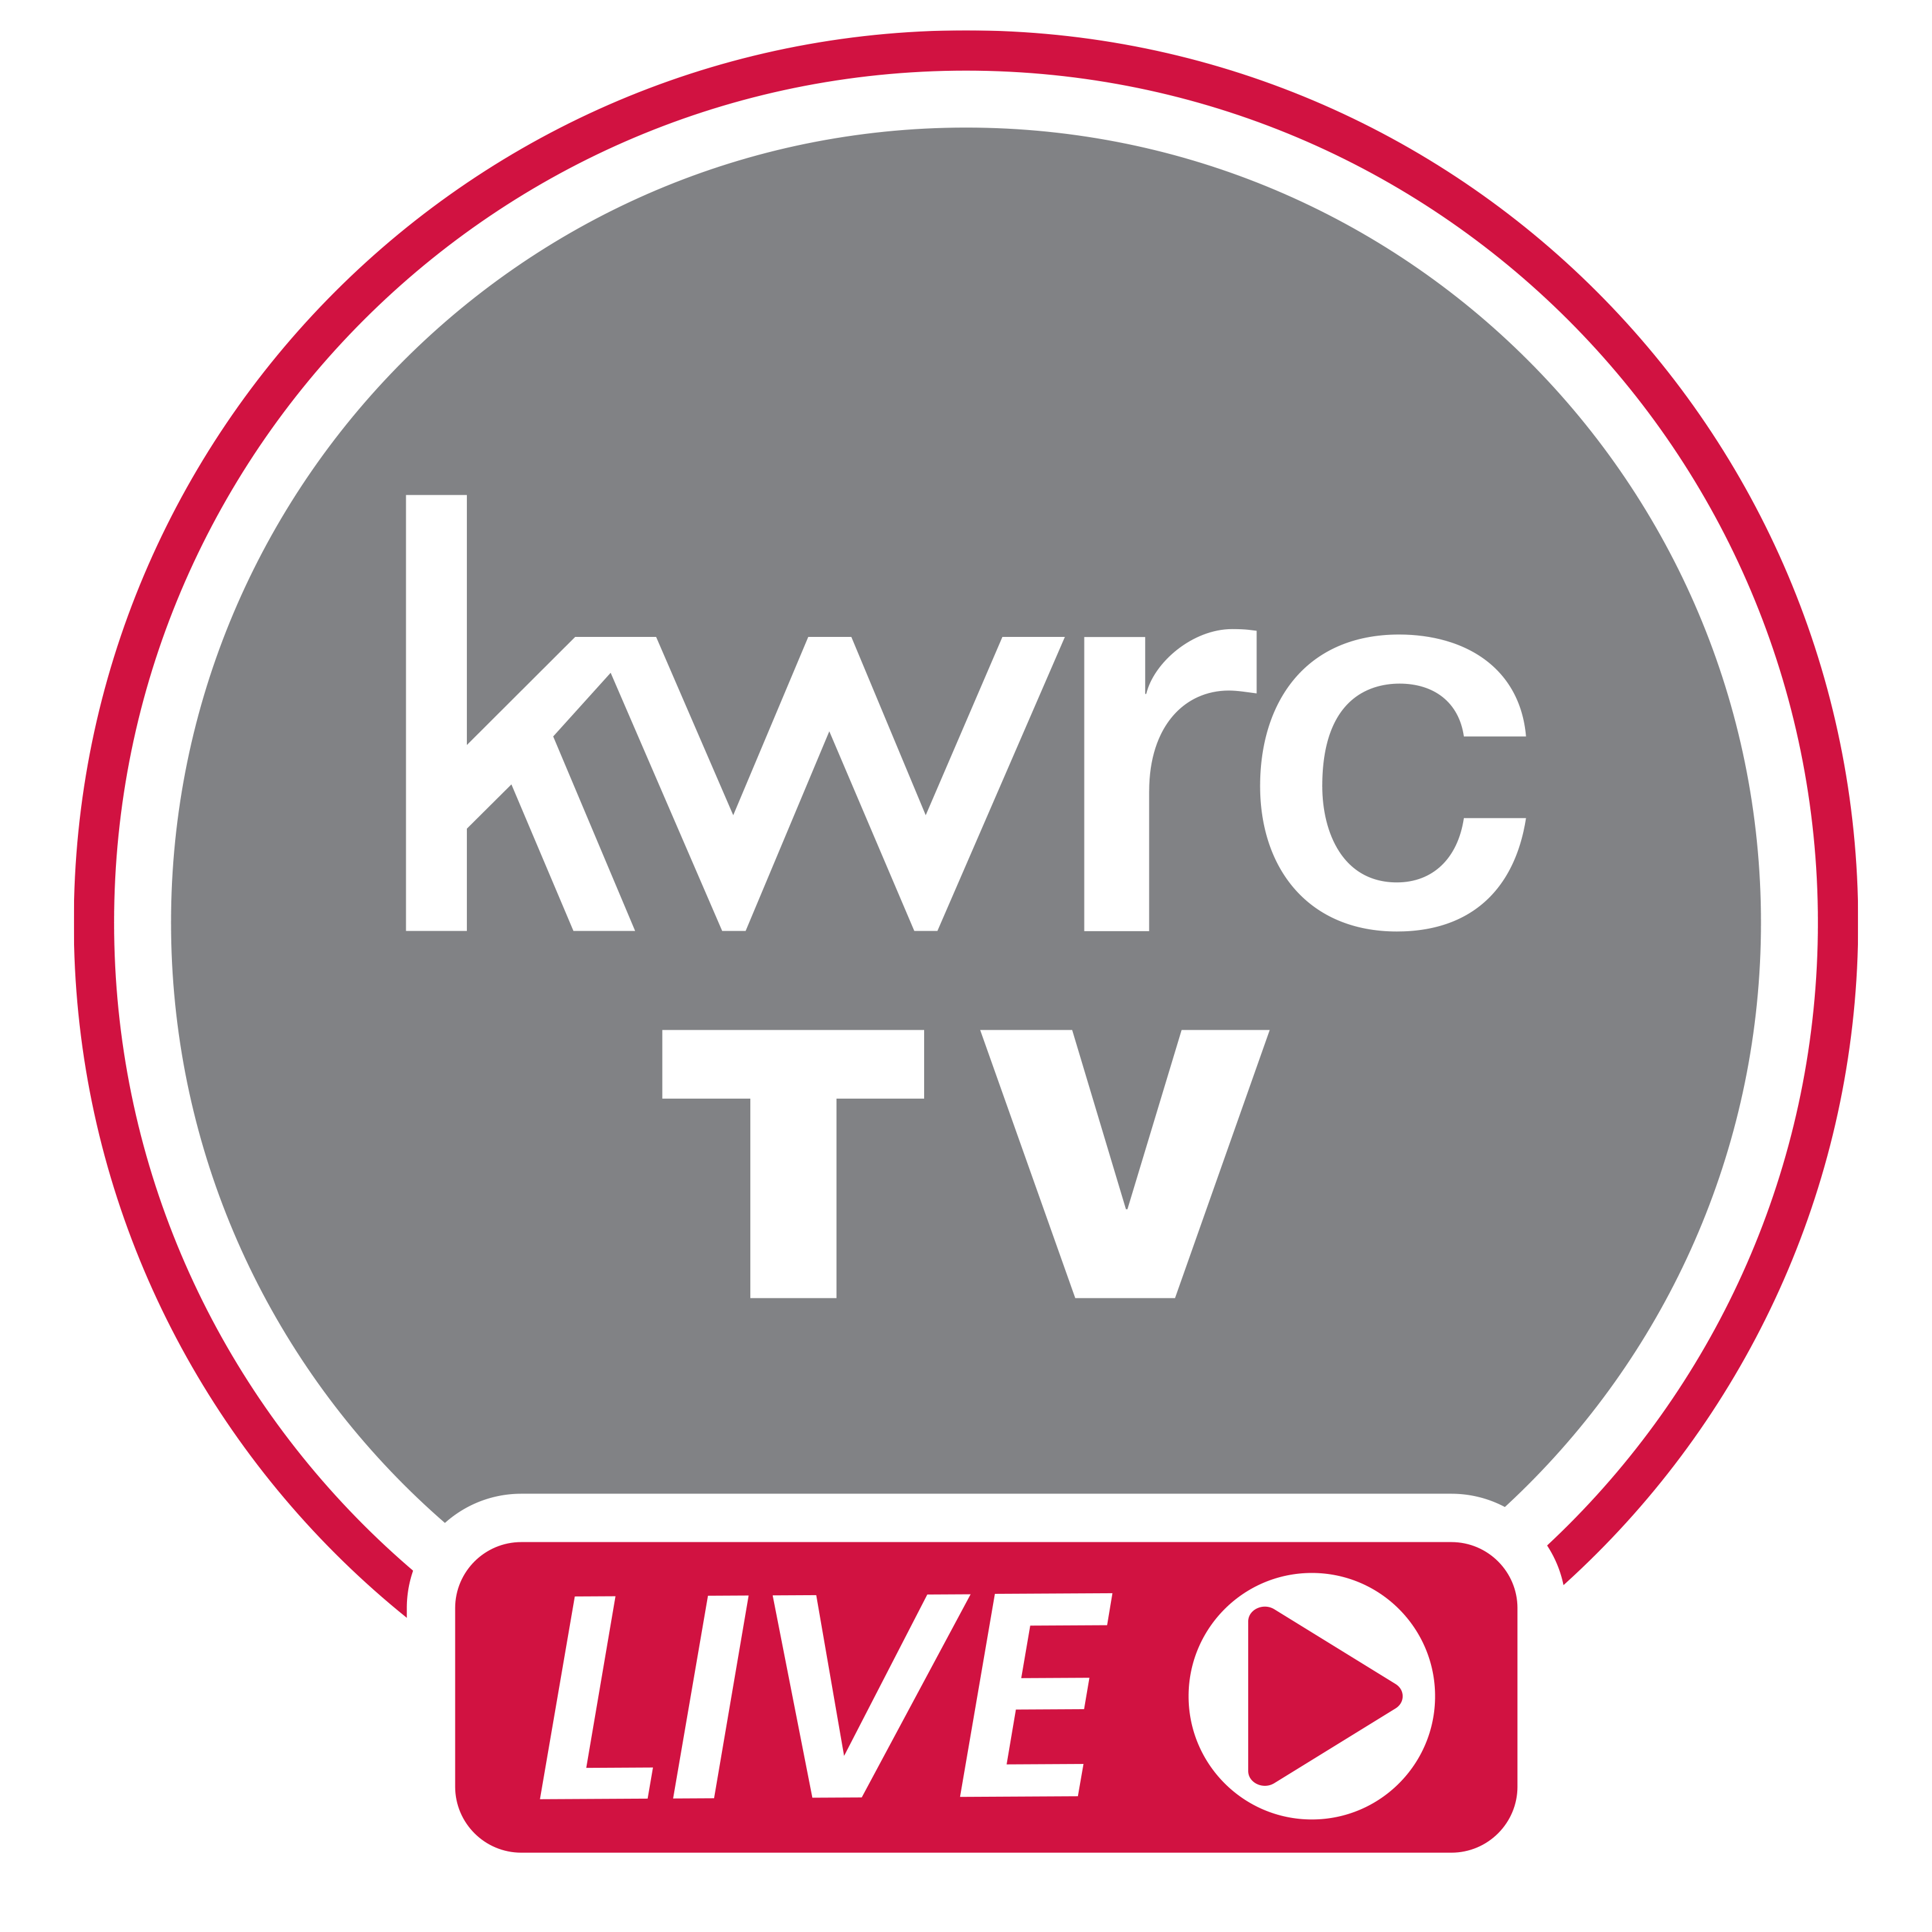 KWRC TV Podcast